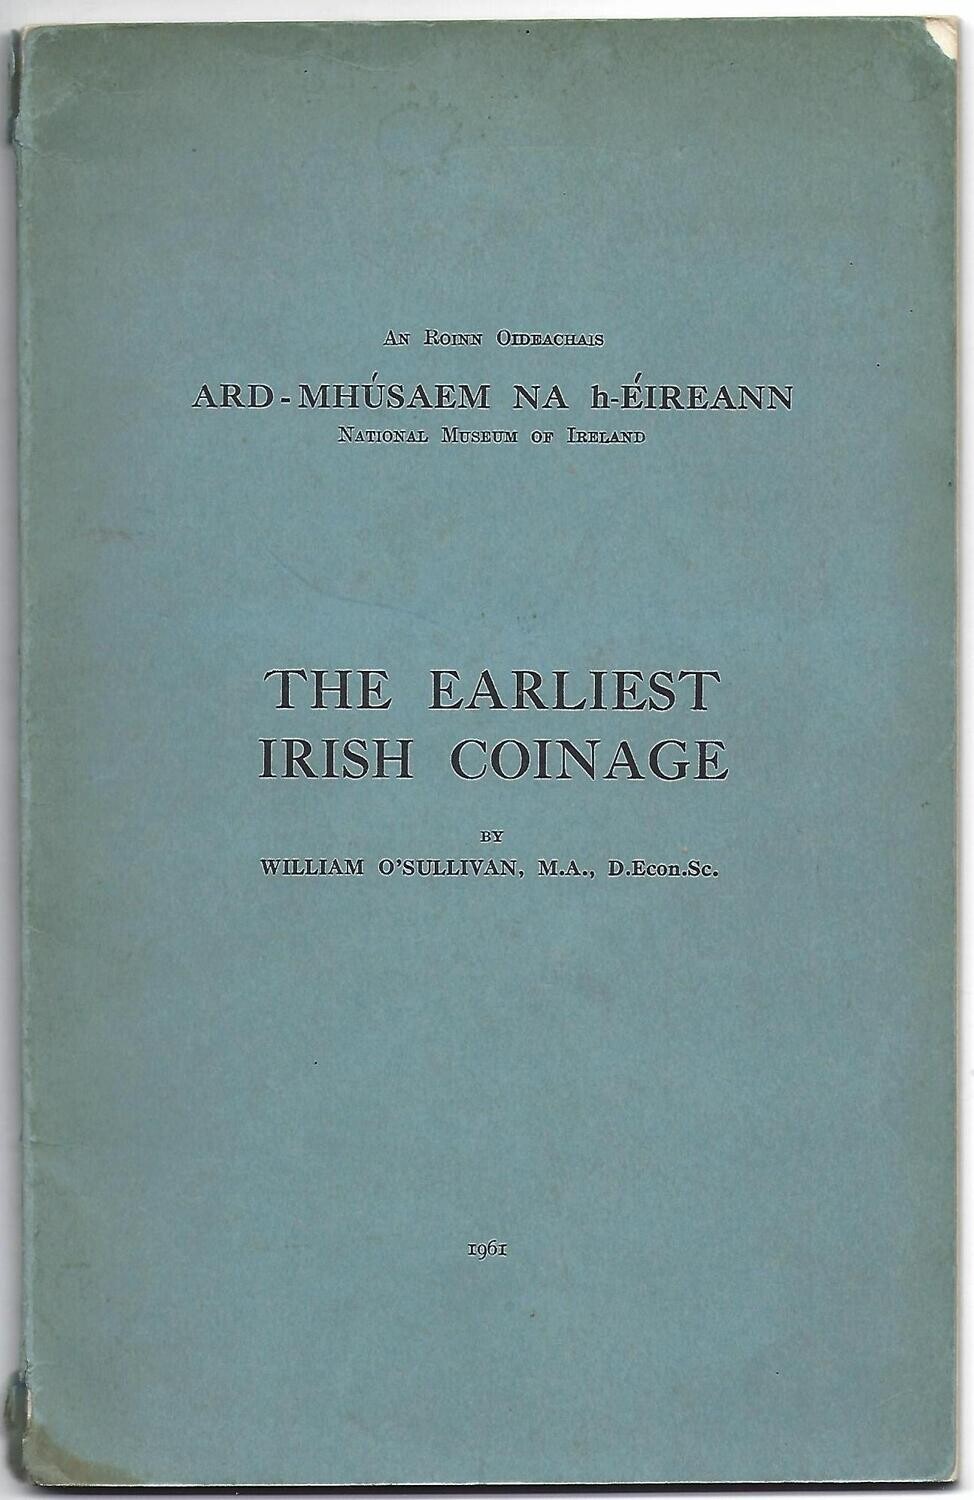 Mediaeval; William O'Sullivan, "The Earliest Irish Coinage."